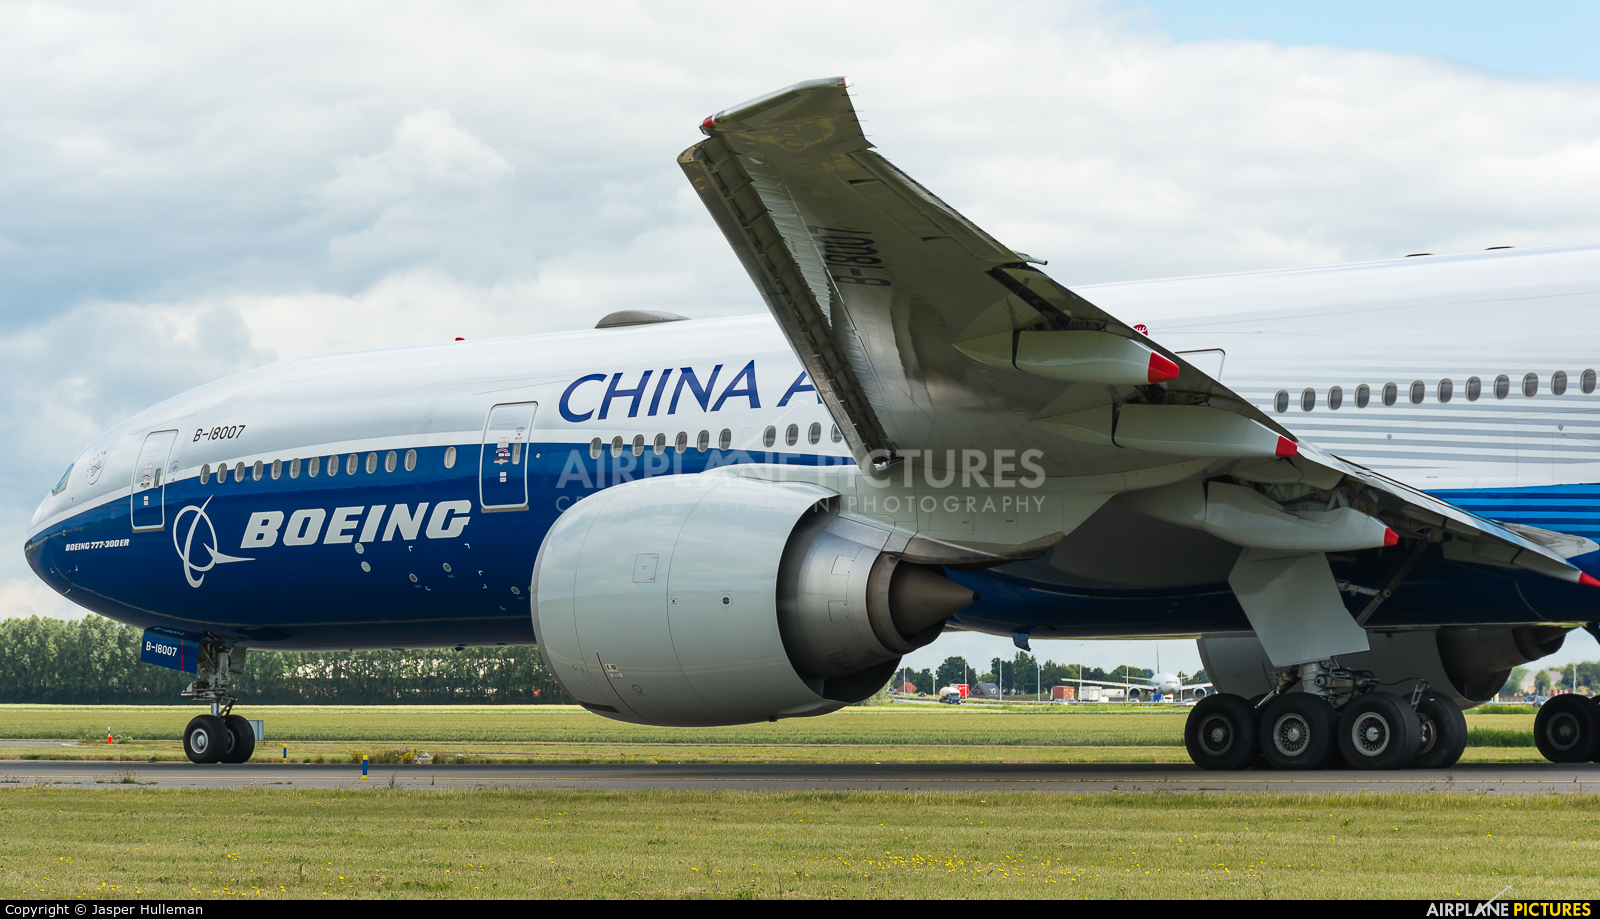 China Airlines B-18007 aircraft at Amsterdam - Schiphol